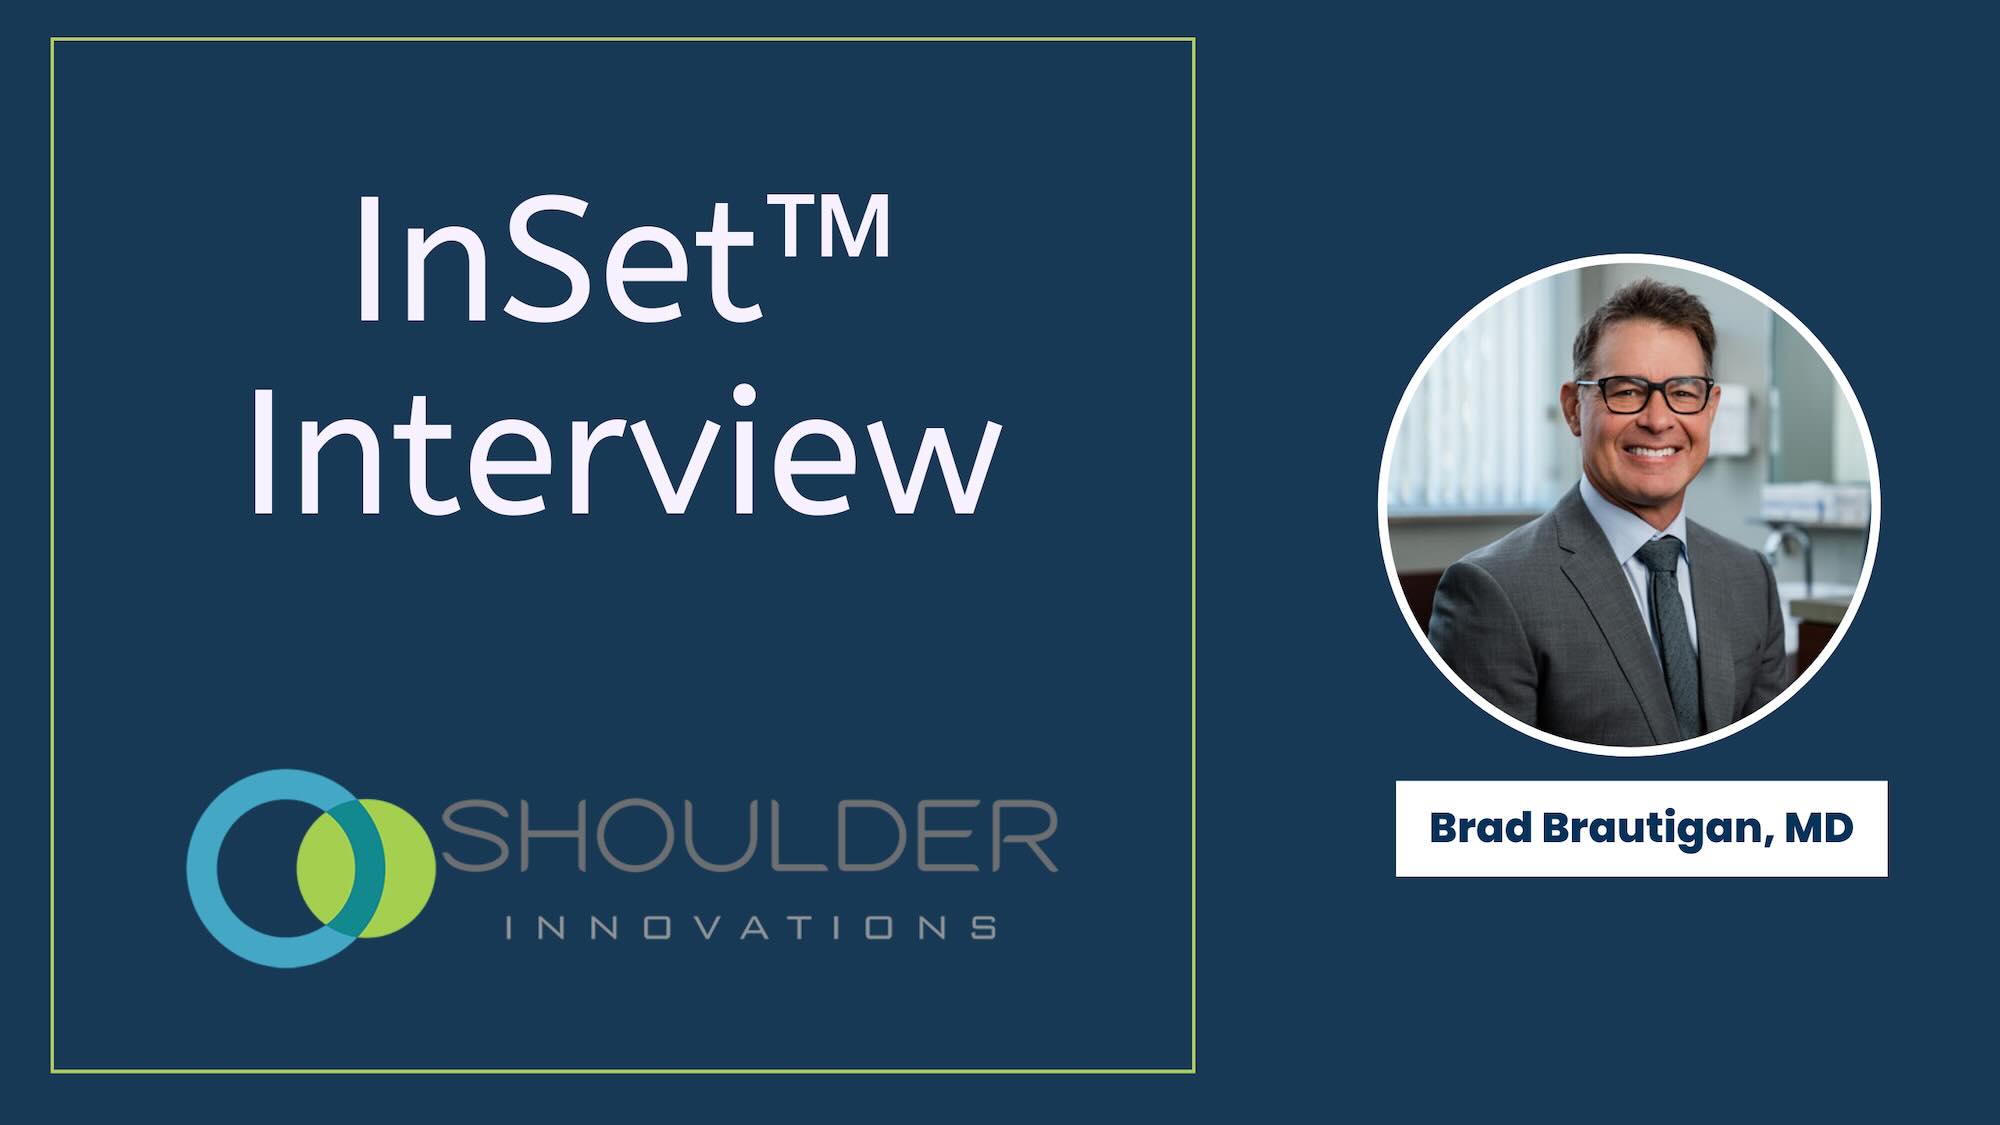 Dr. Brad Bruatigan interviews with Shoulder Innovations